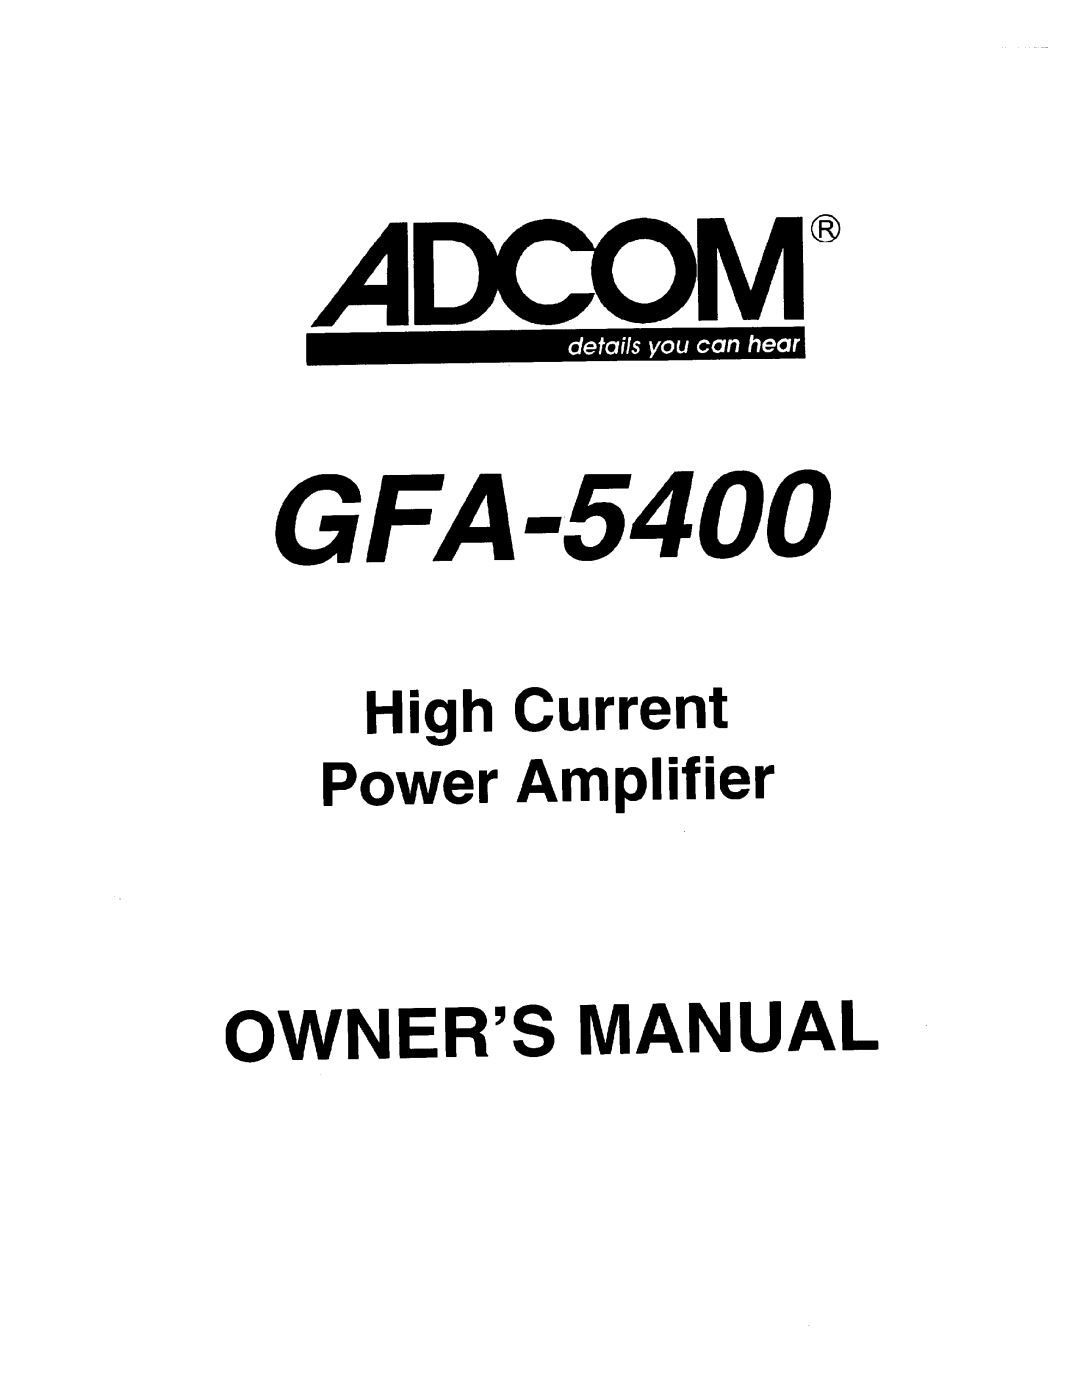 Adcom GFA-5400 manual 